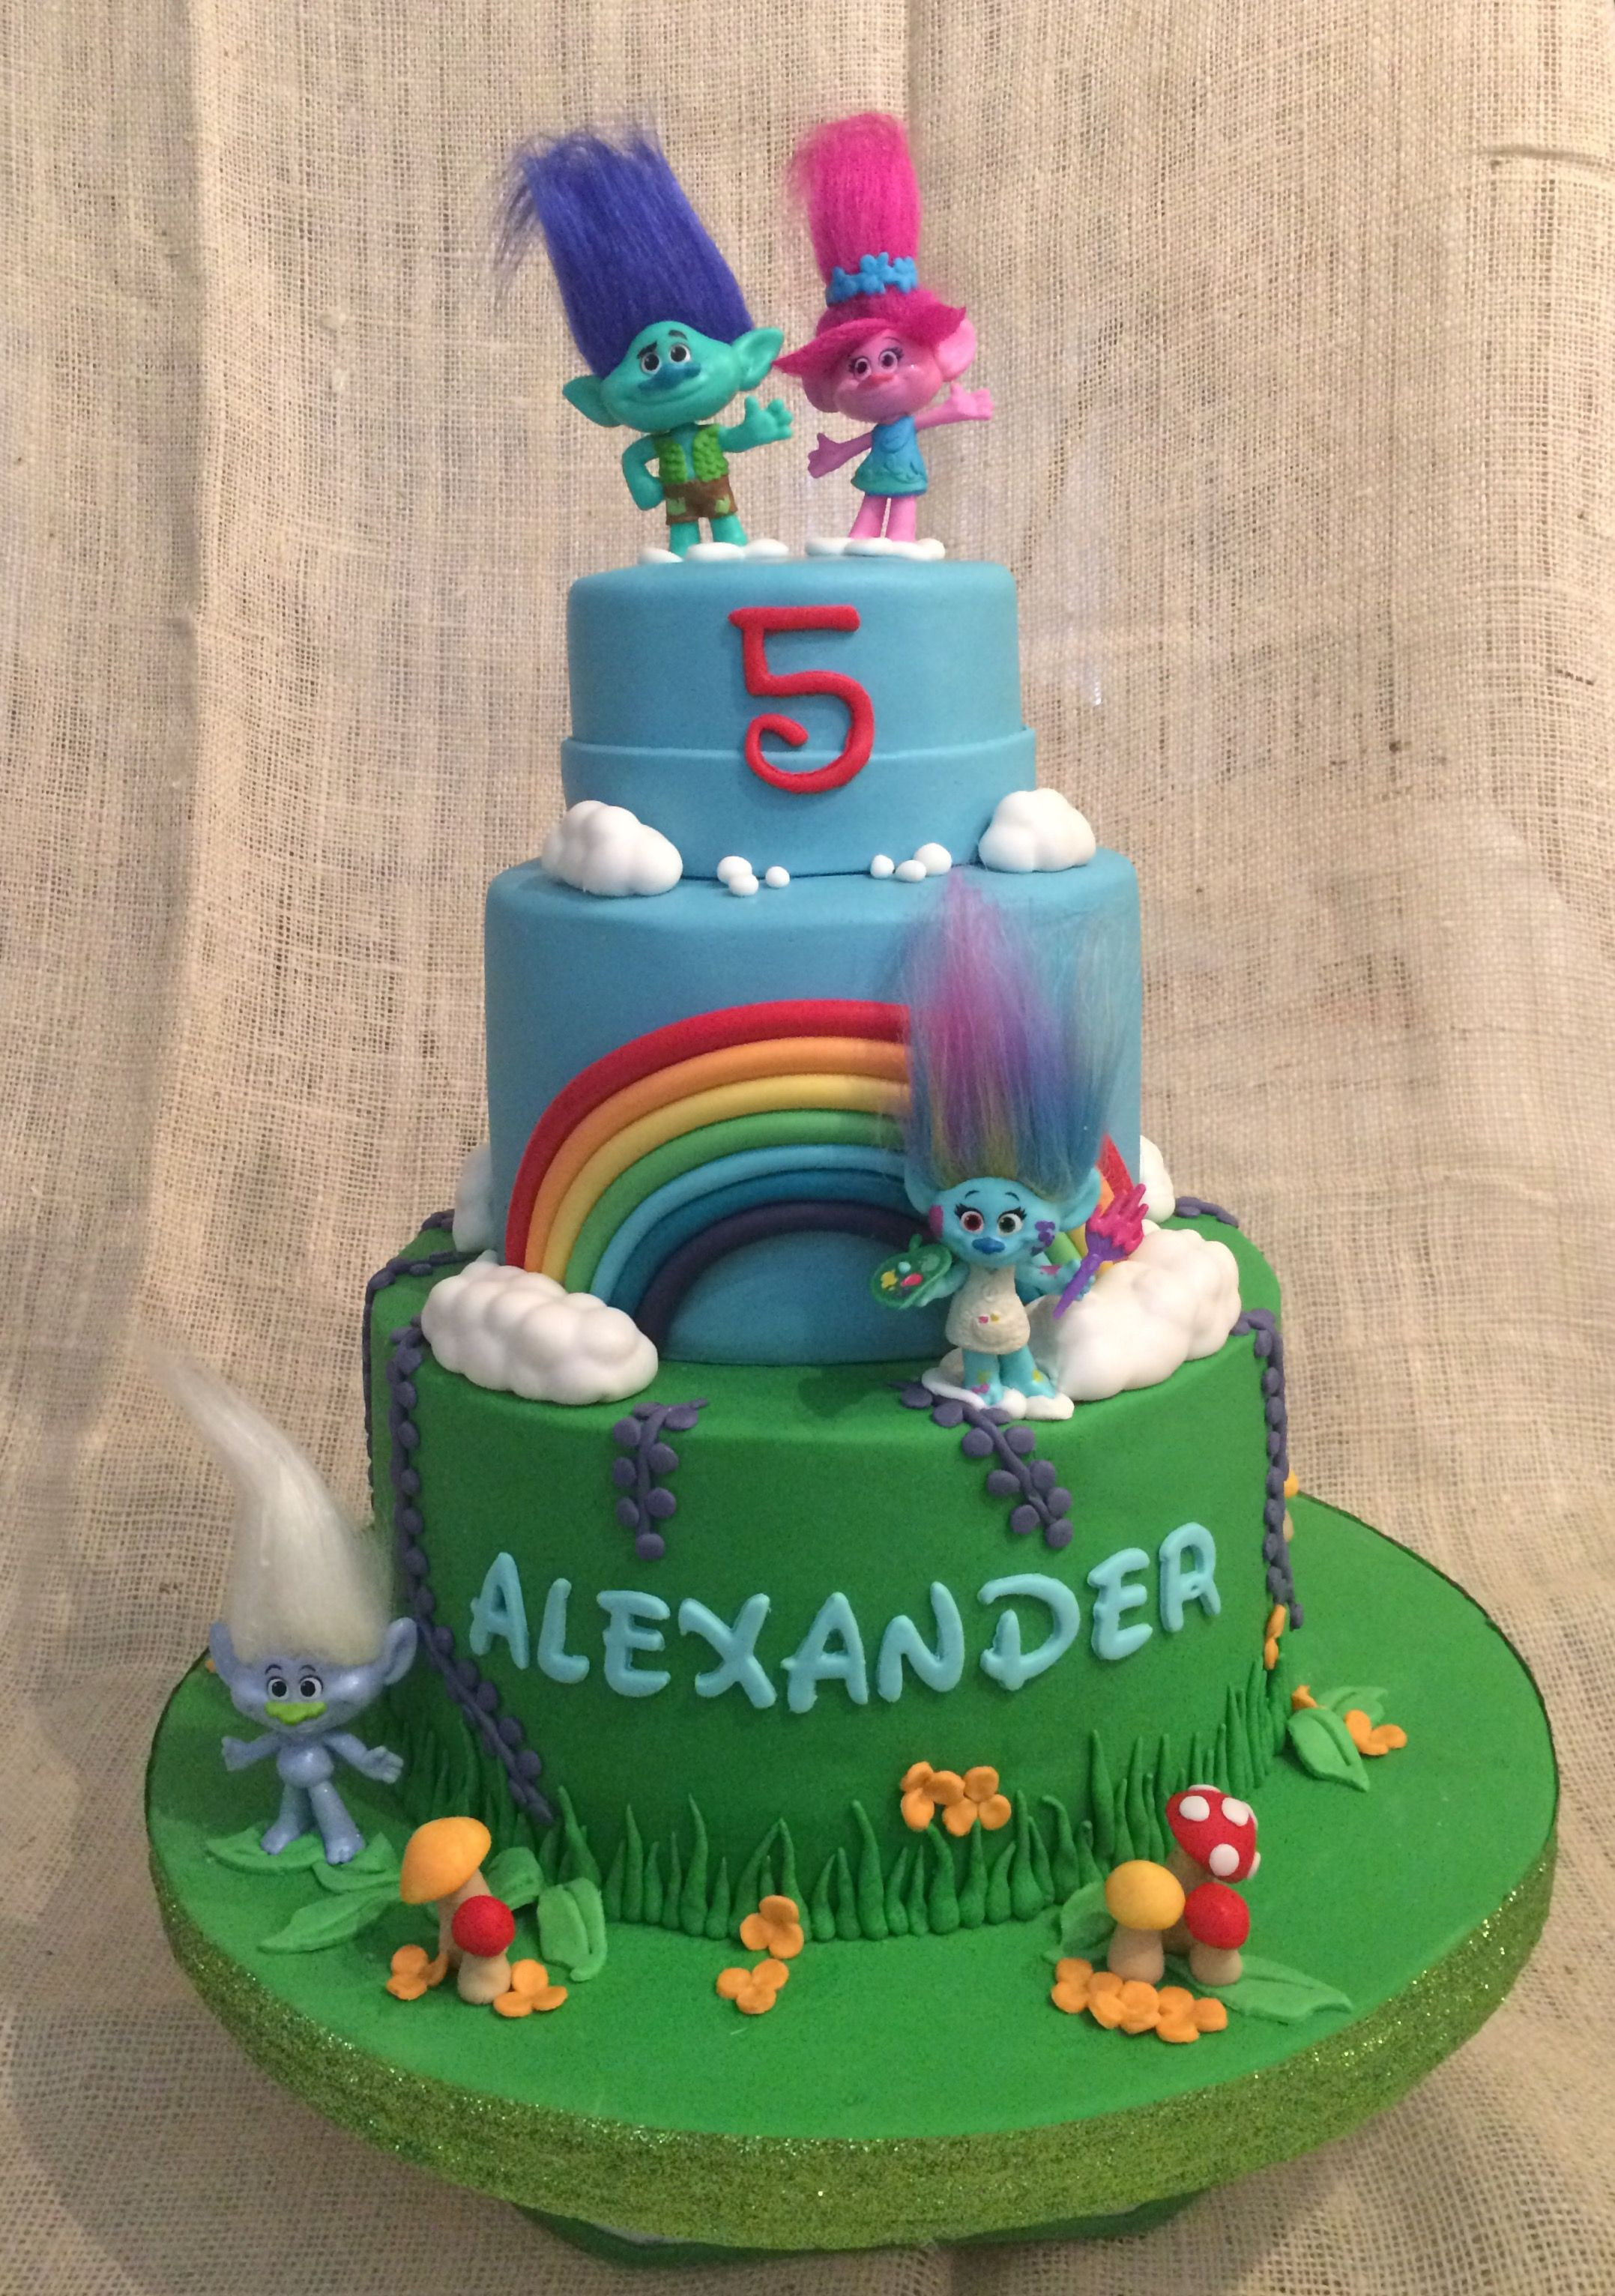 Best ideas about Trolls Birthday Cake Ideas
. Save or Pin Trolls cake Birthday cakes Now.